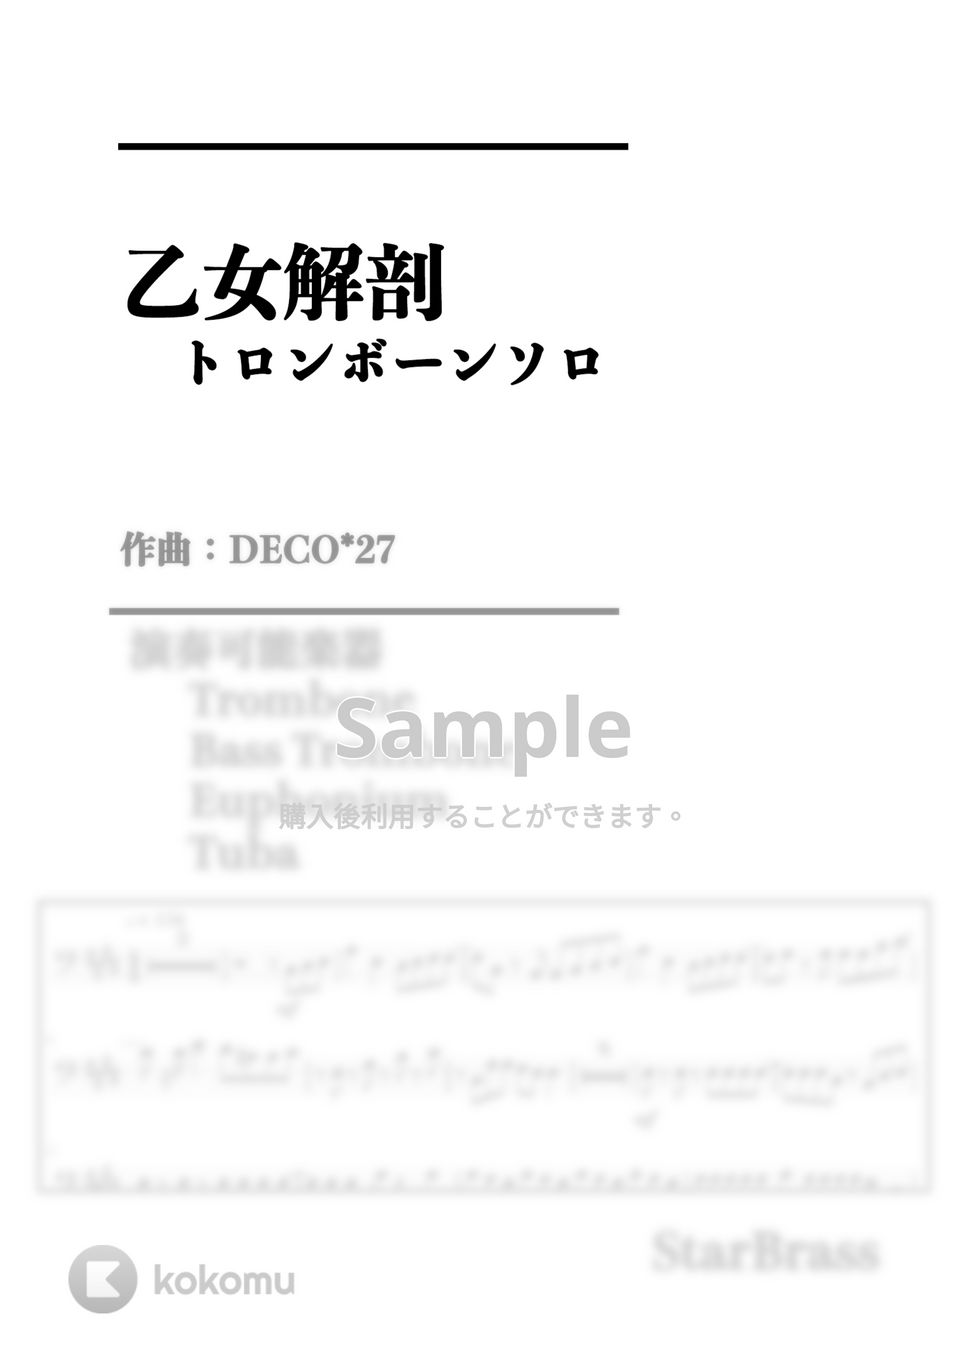 DECO*27 - 乙女解剖 (-Trombone Solo- 原キー) by Creampuff